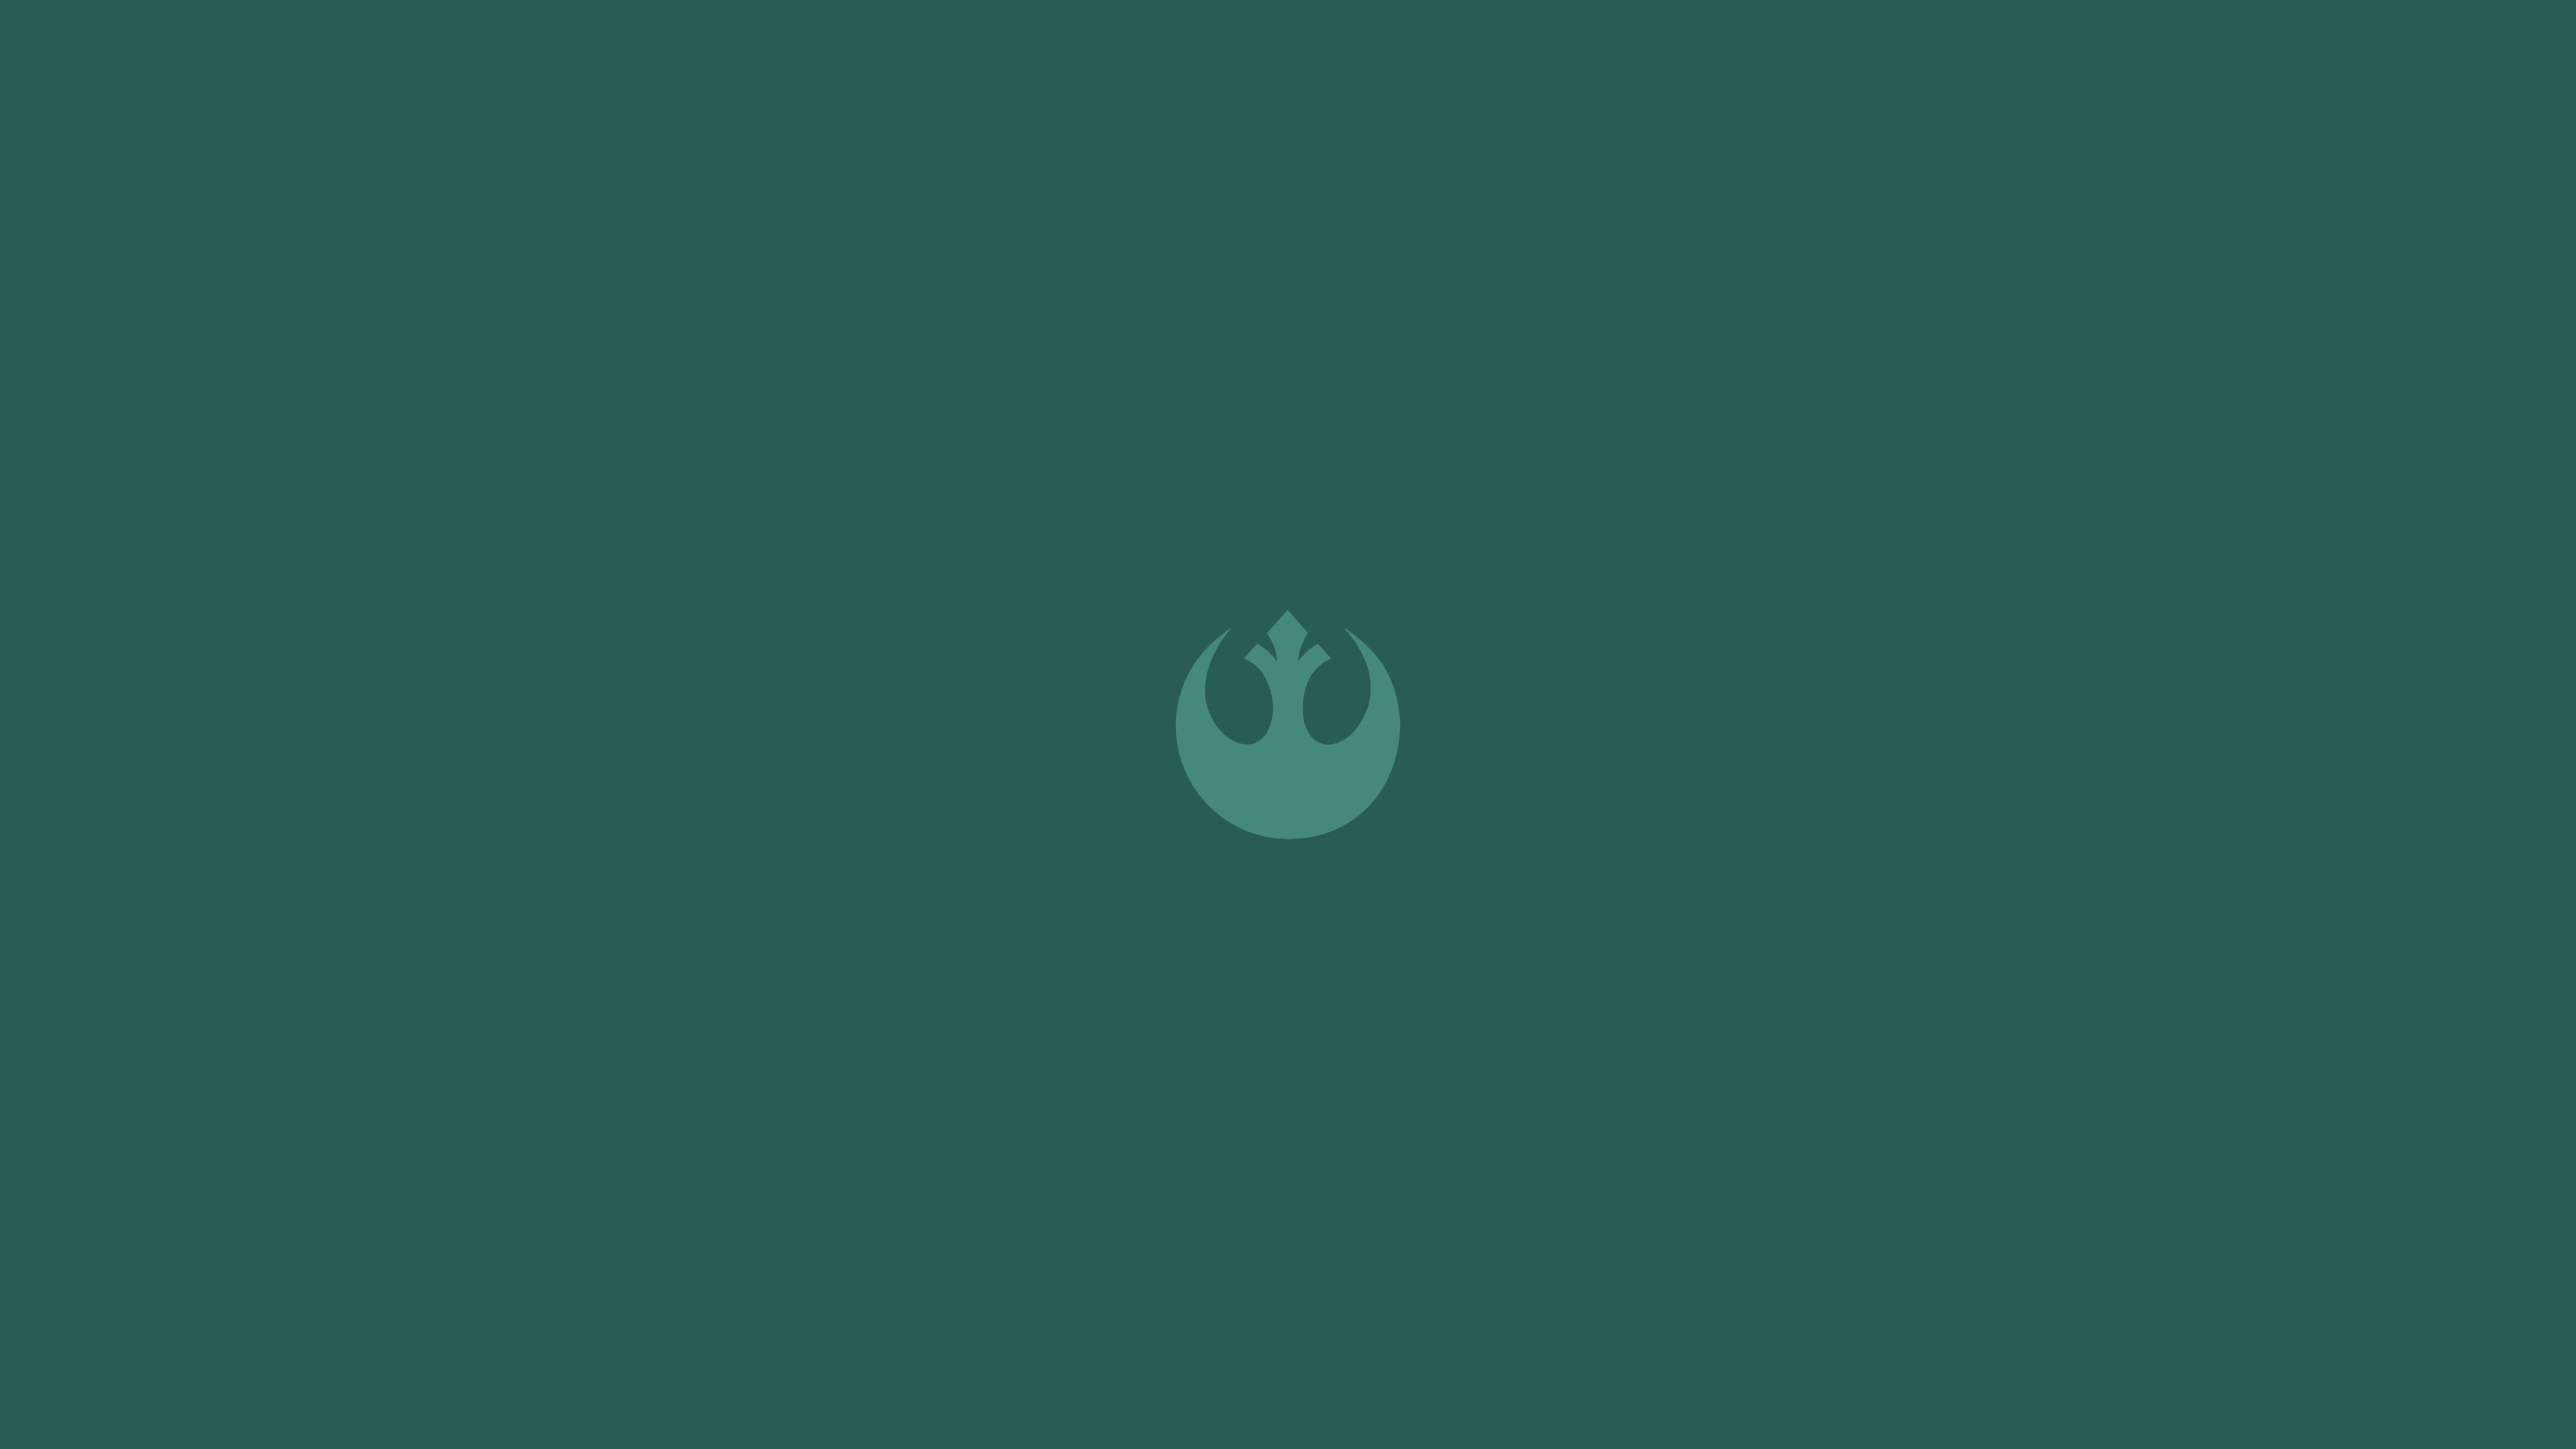 Star Wars, Rebel Alliance, minimalism